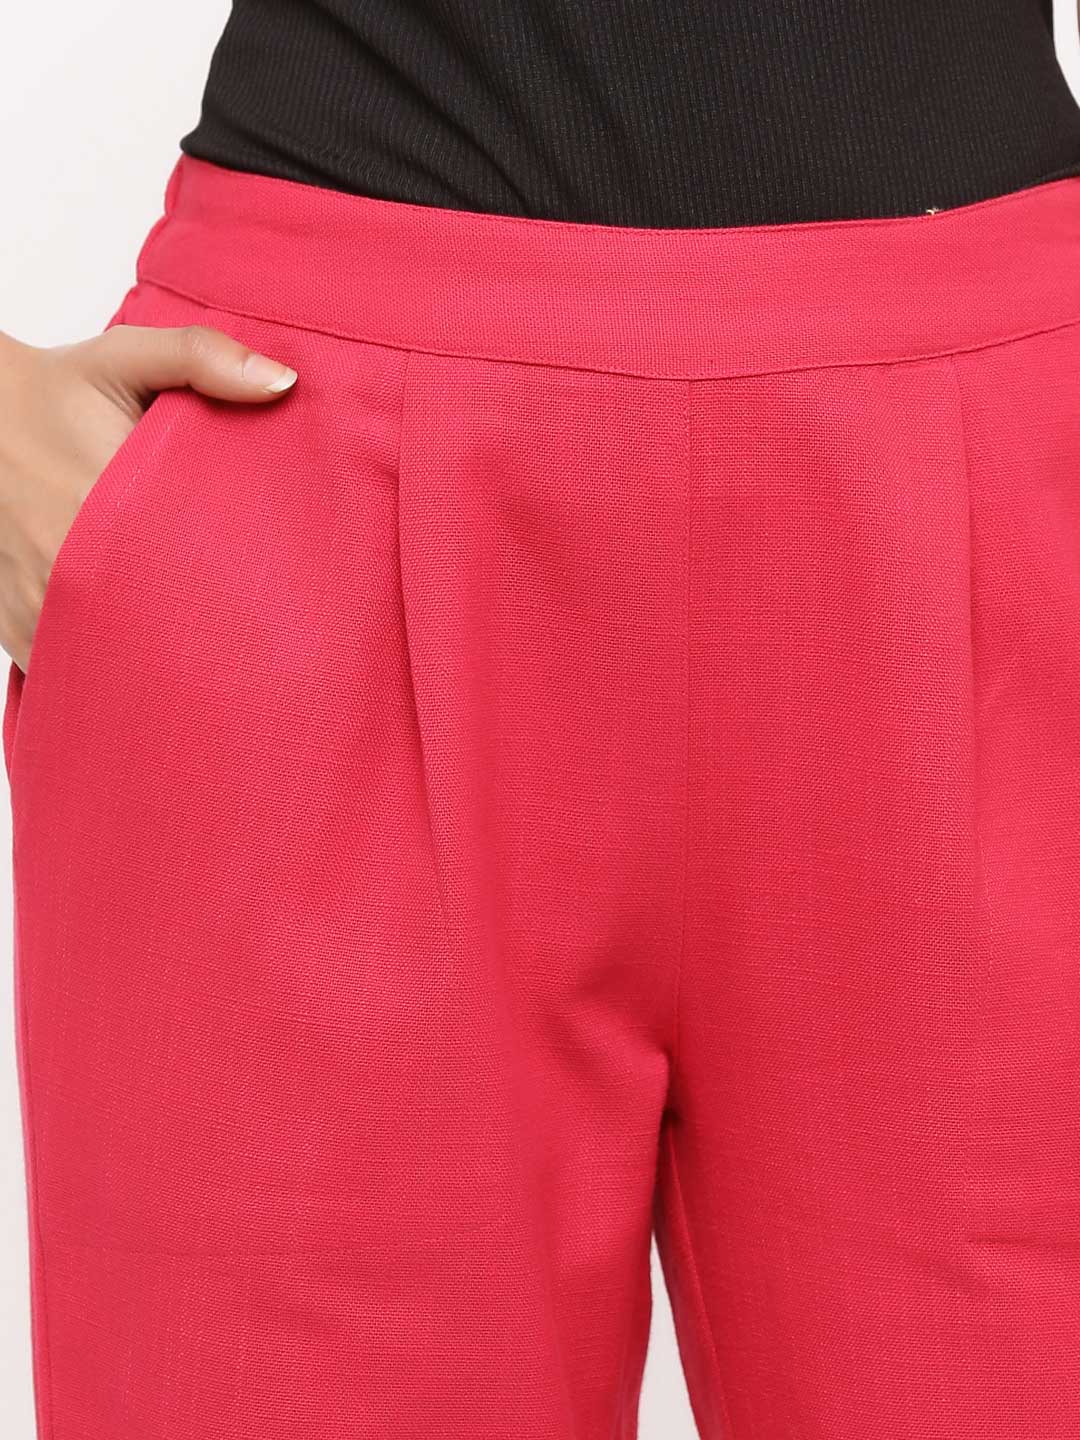 Buy Slim fit pants for women